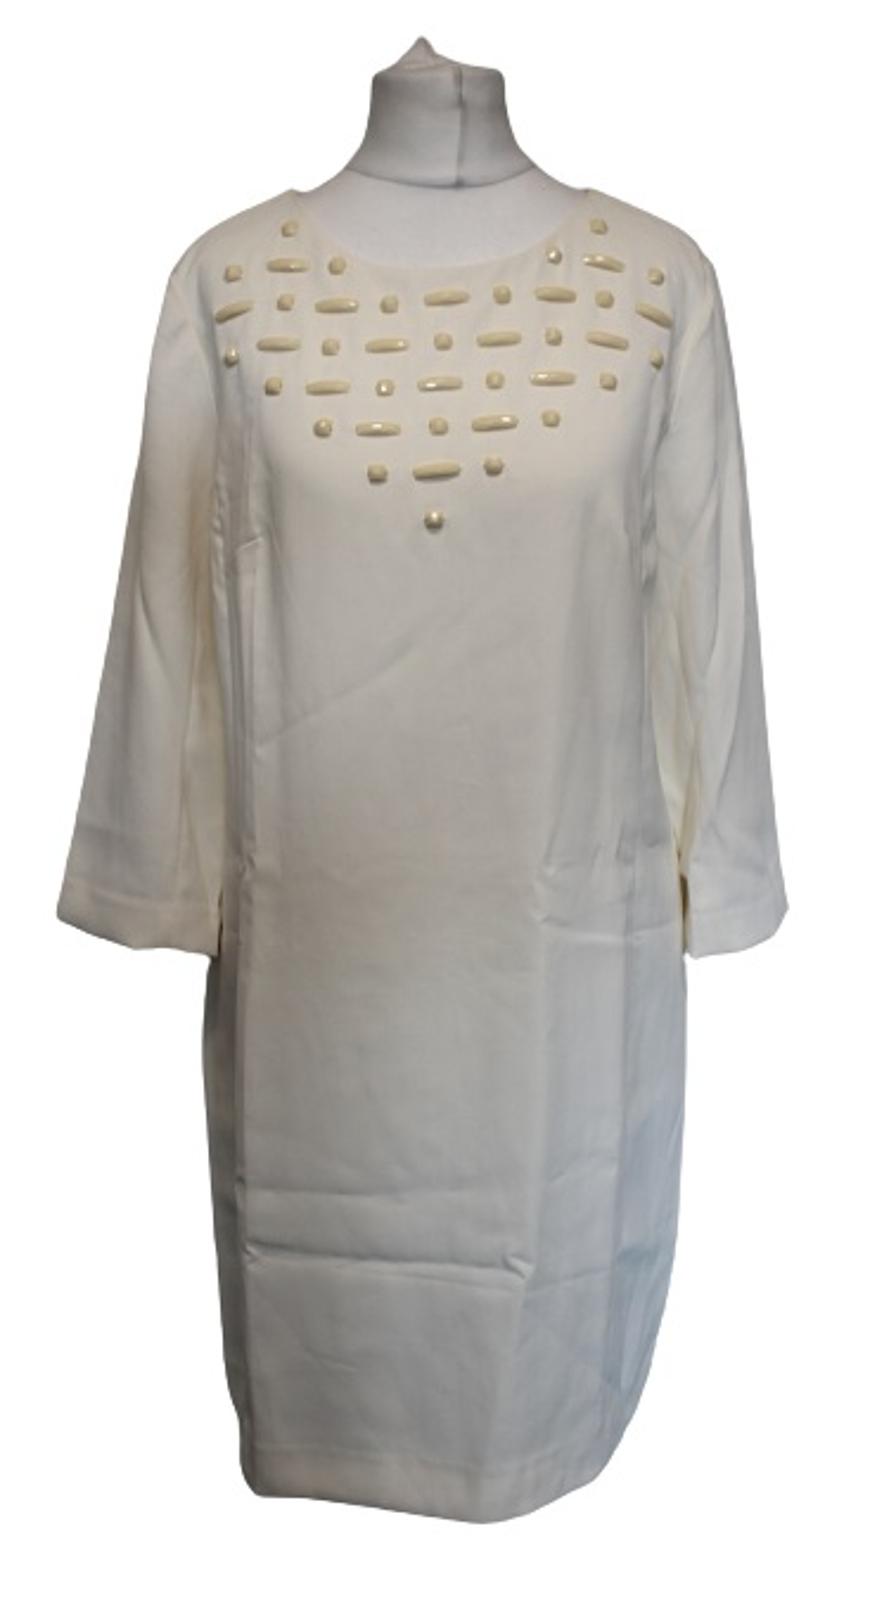 ANN TAYLOR Ladies Cream Ivory Beaded Shift Mini Cocktail Dress US6 UK10 NEW